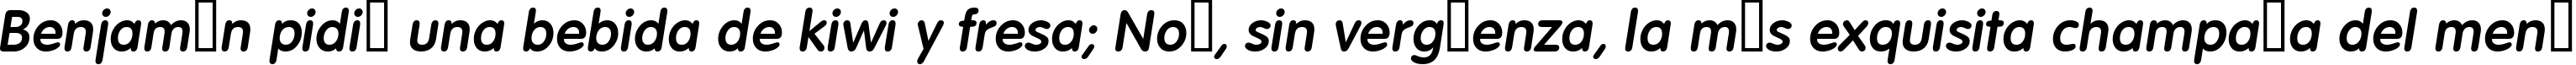 Пример написания шрифтом a_FuturaRoundDemi Italic текста на испанском